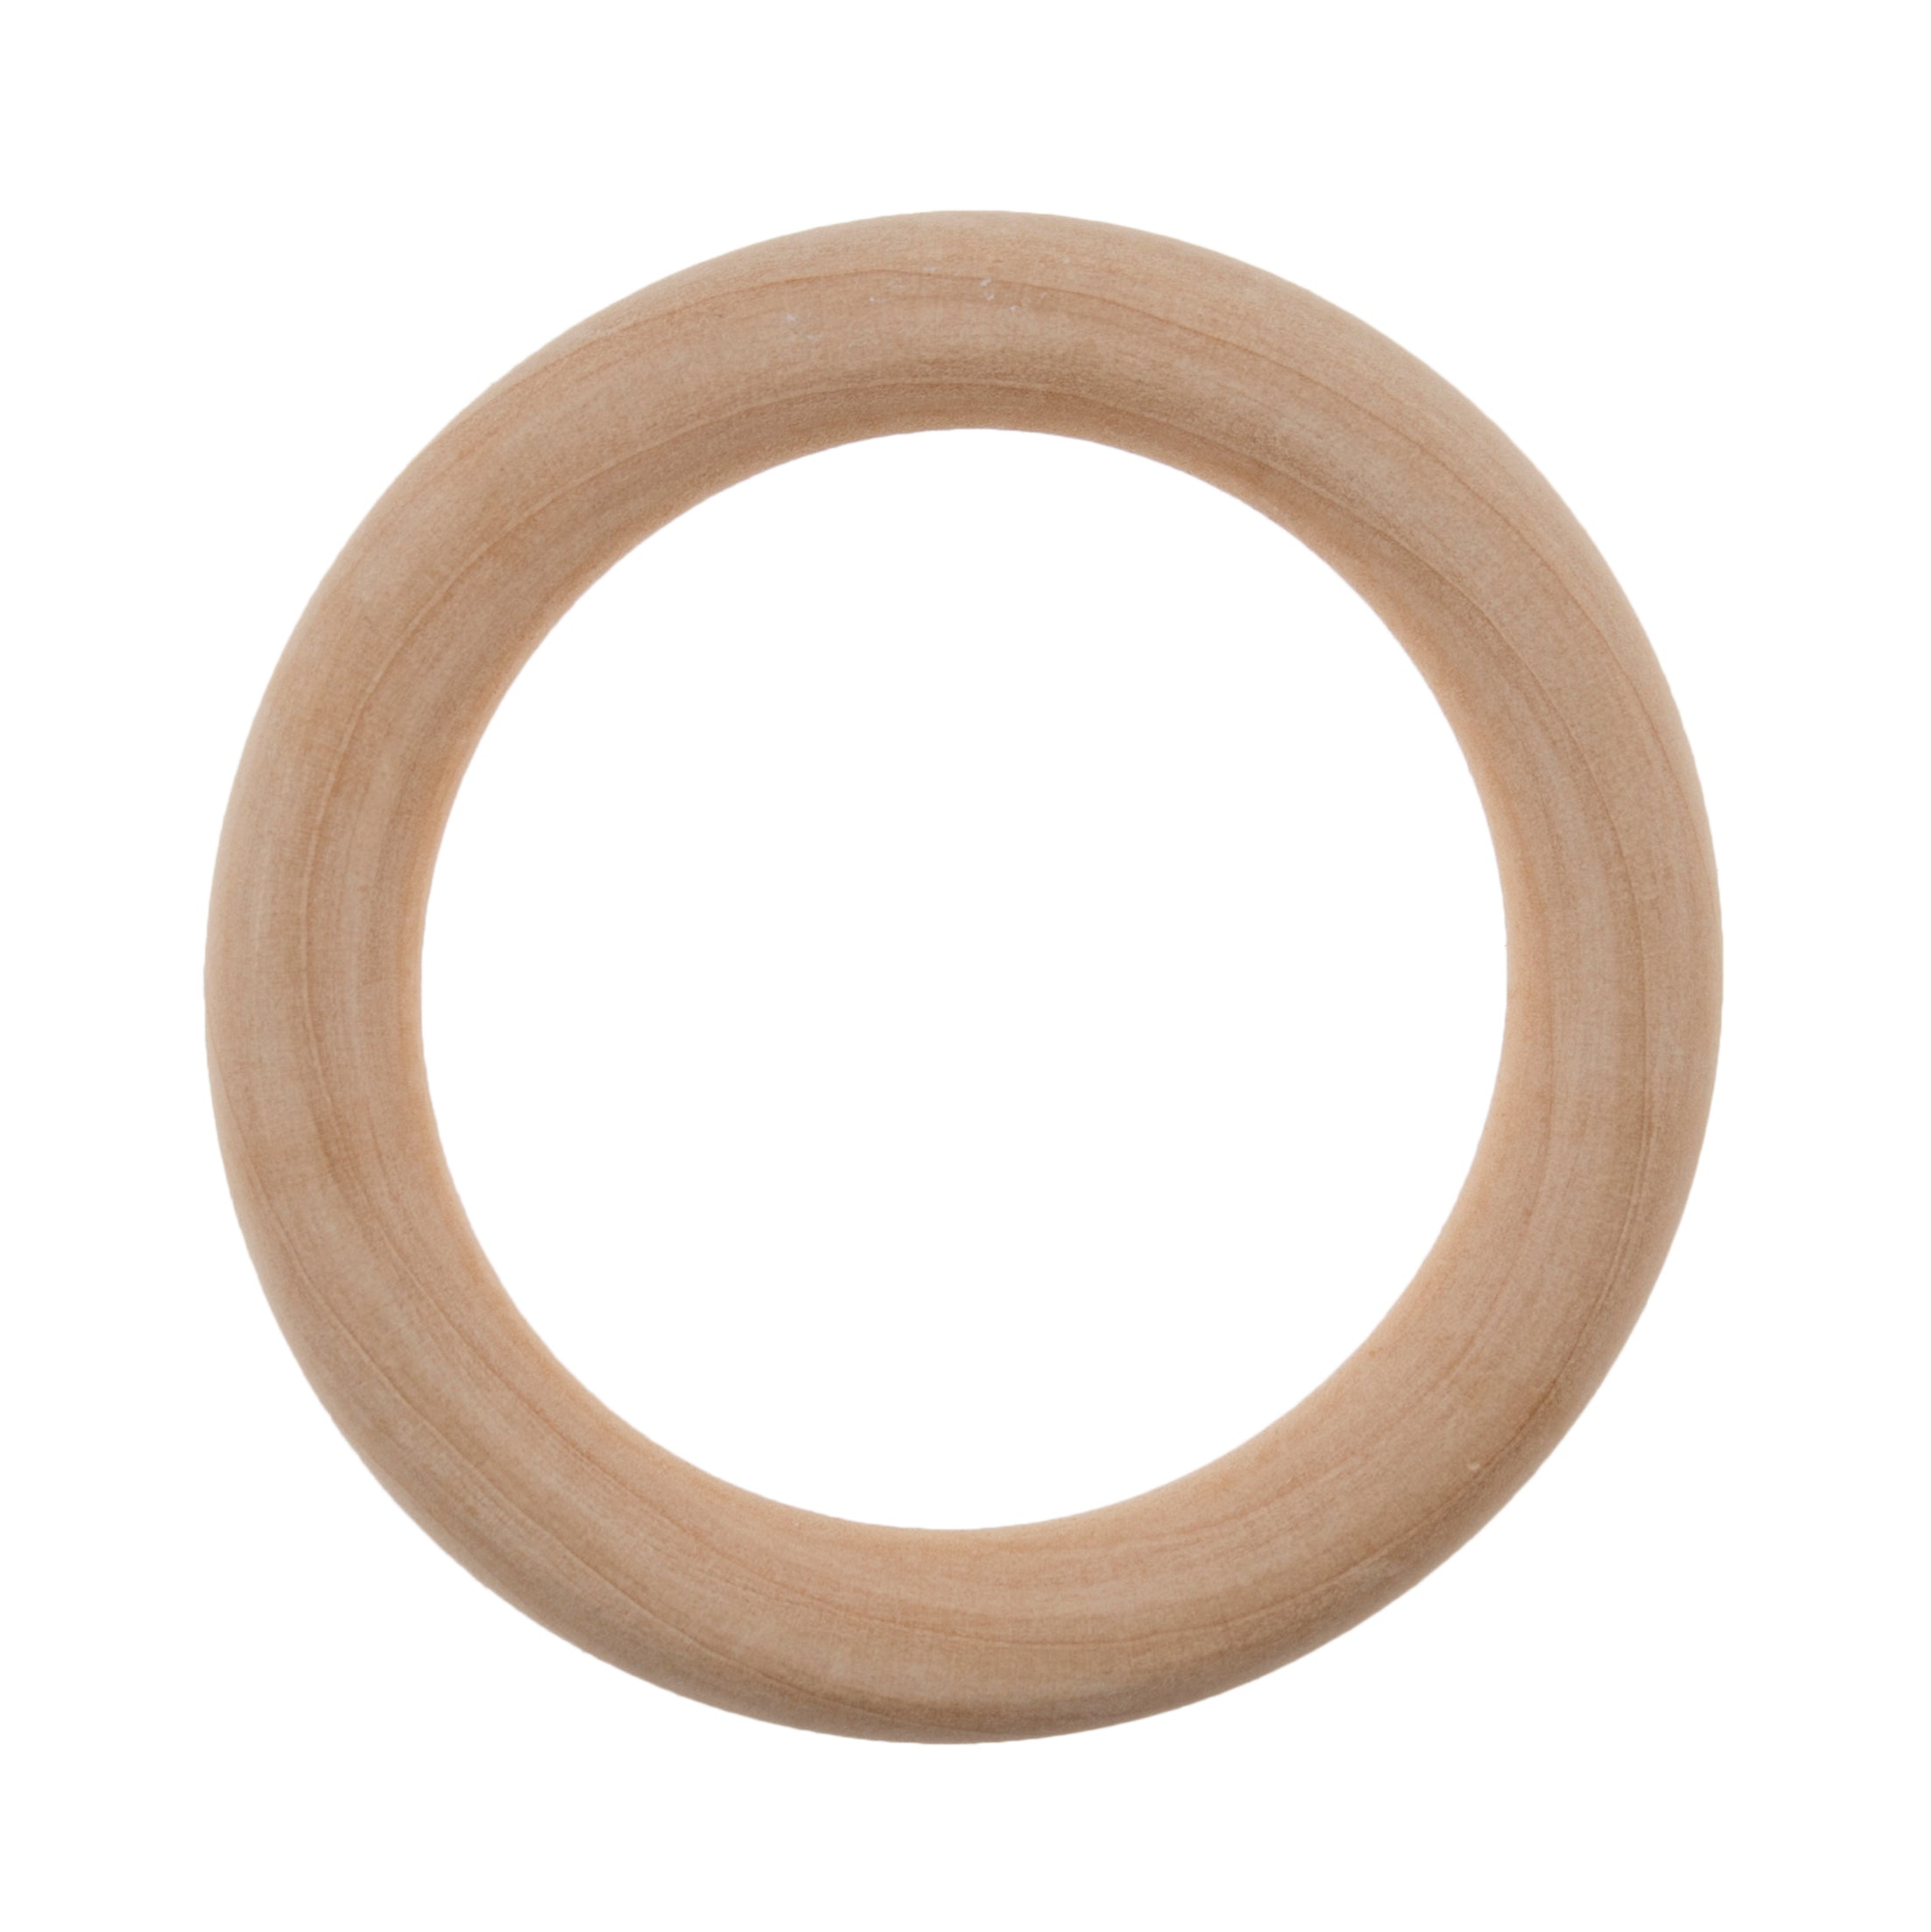 Wooden Craft Ring 7cm